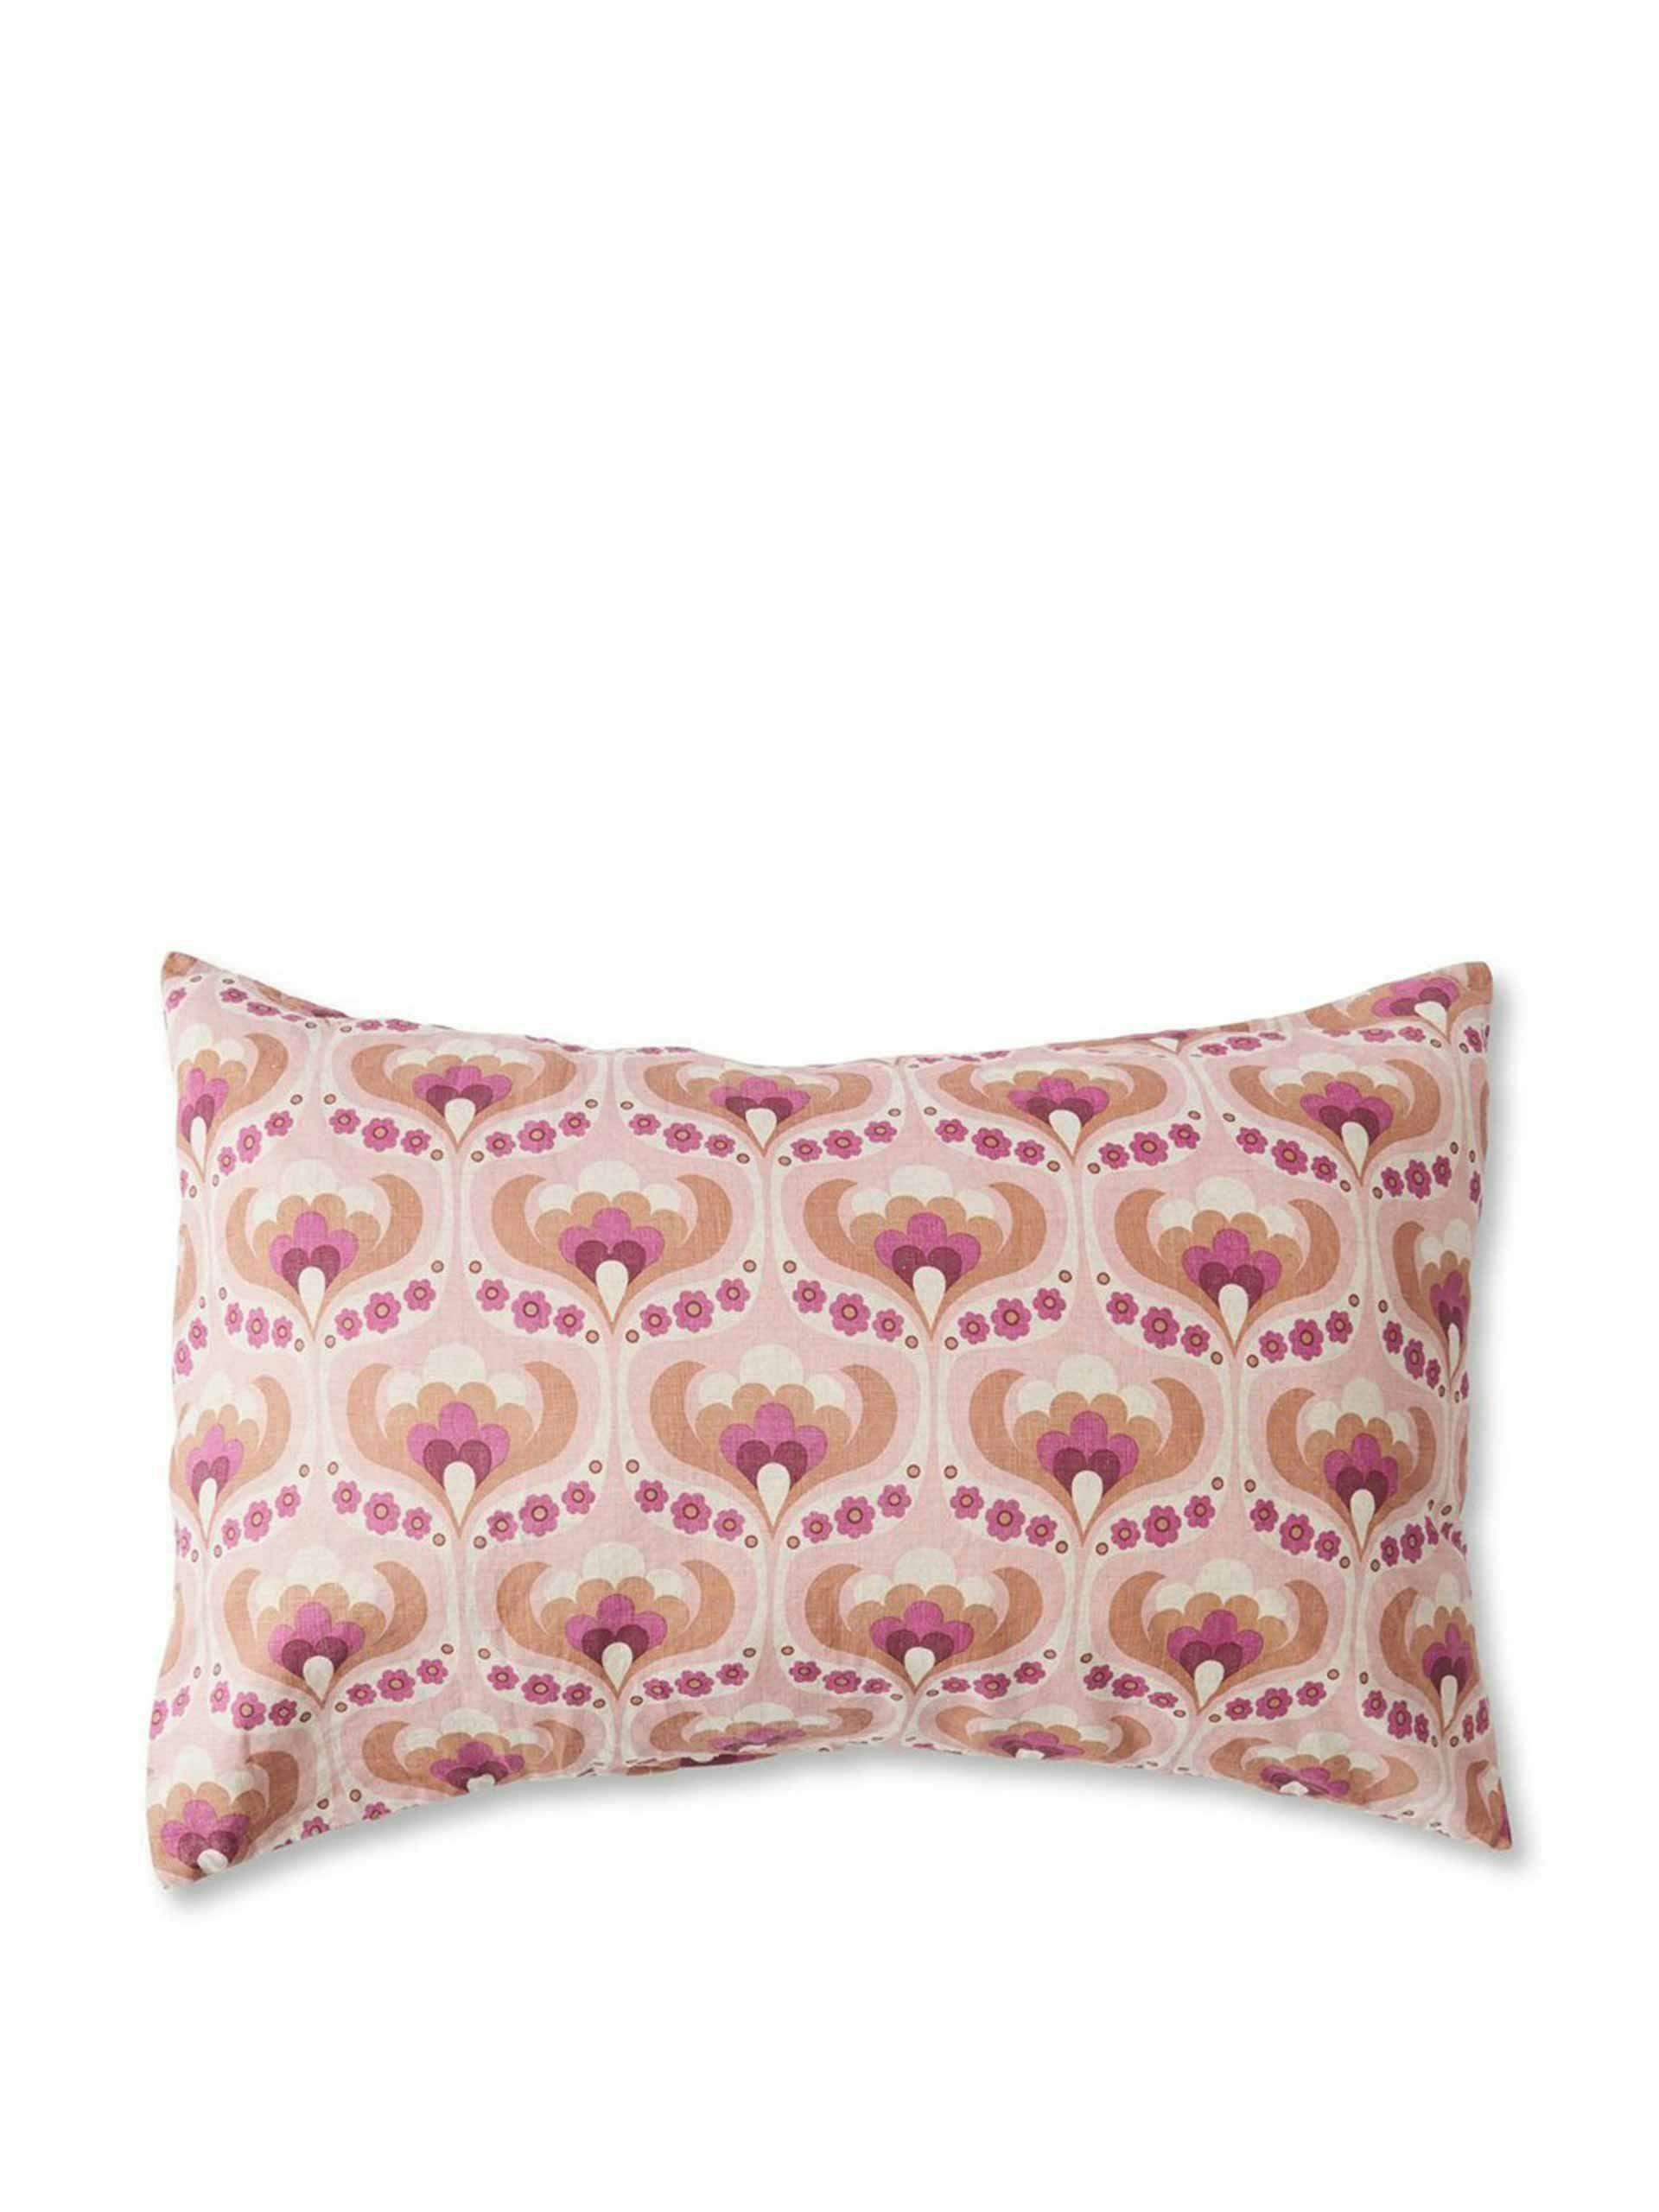 Floral pillowcase set